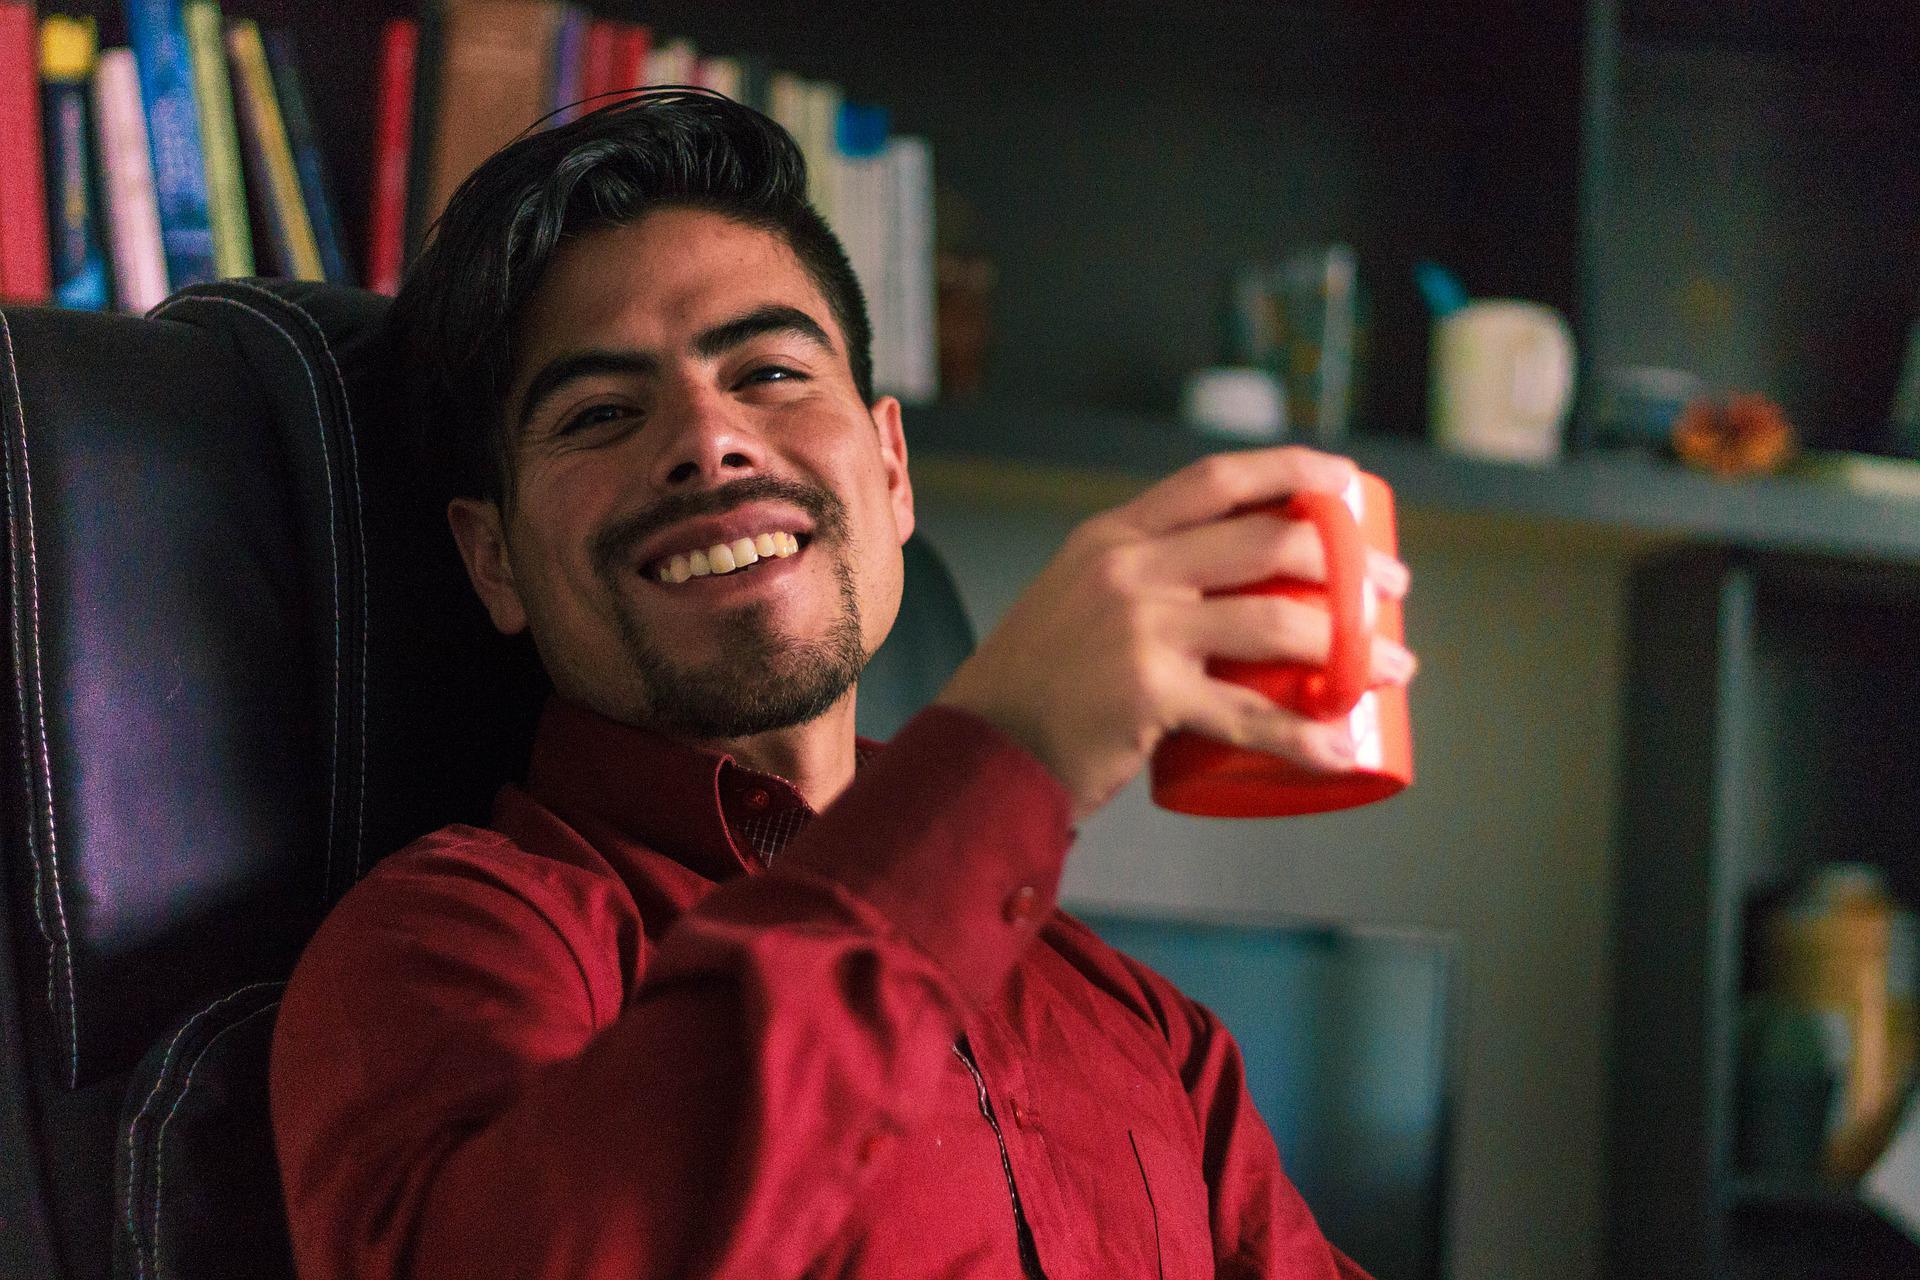 Man smiling whilst holding a mug